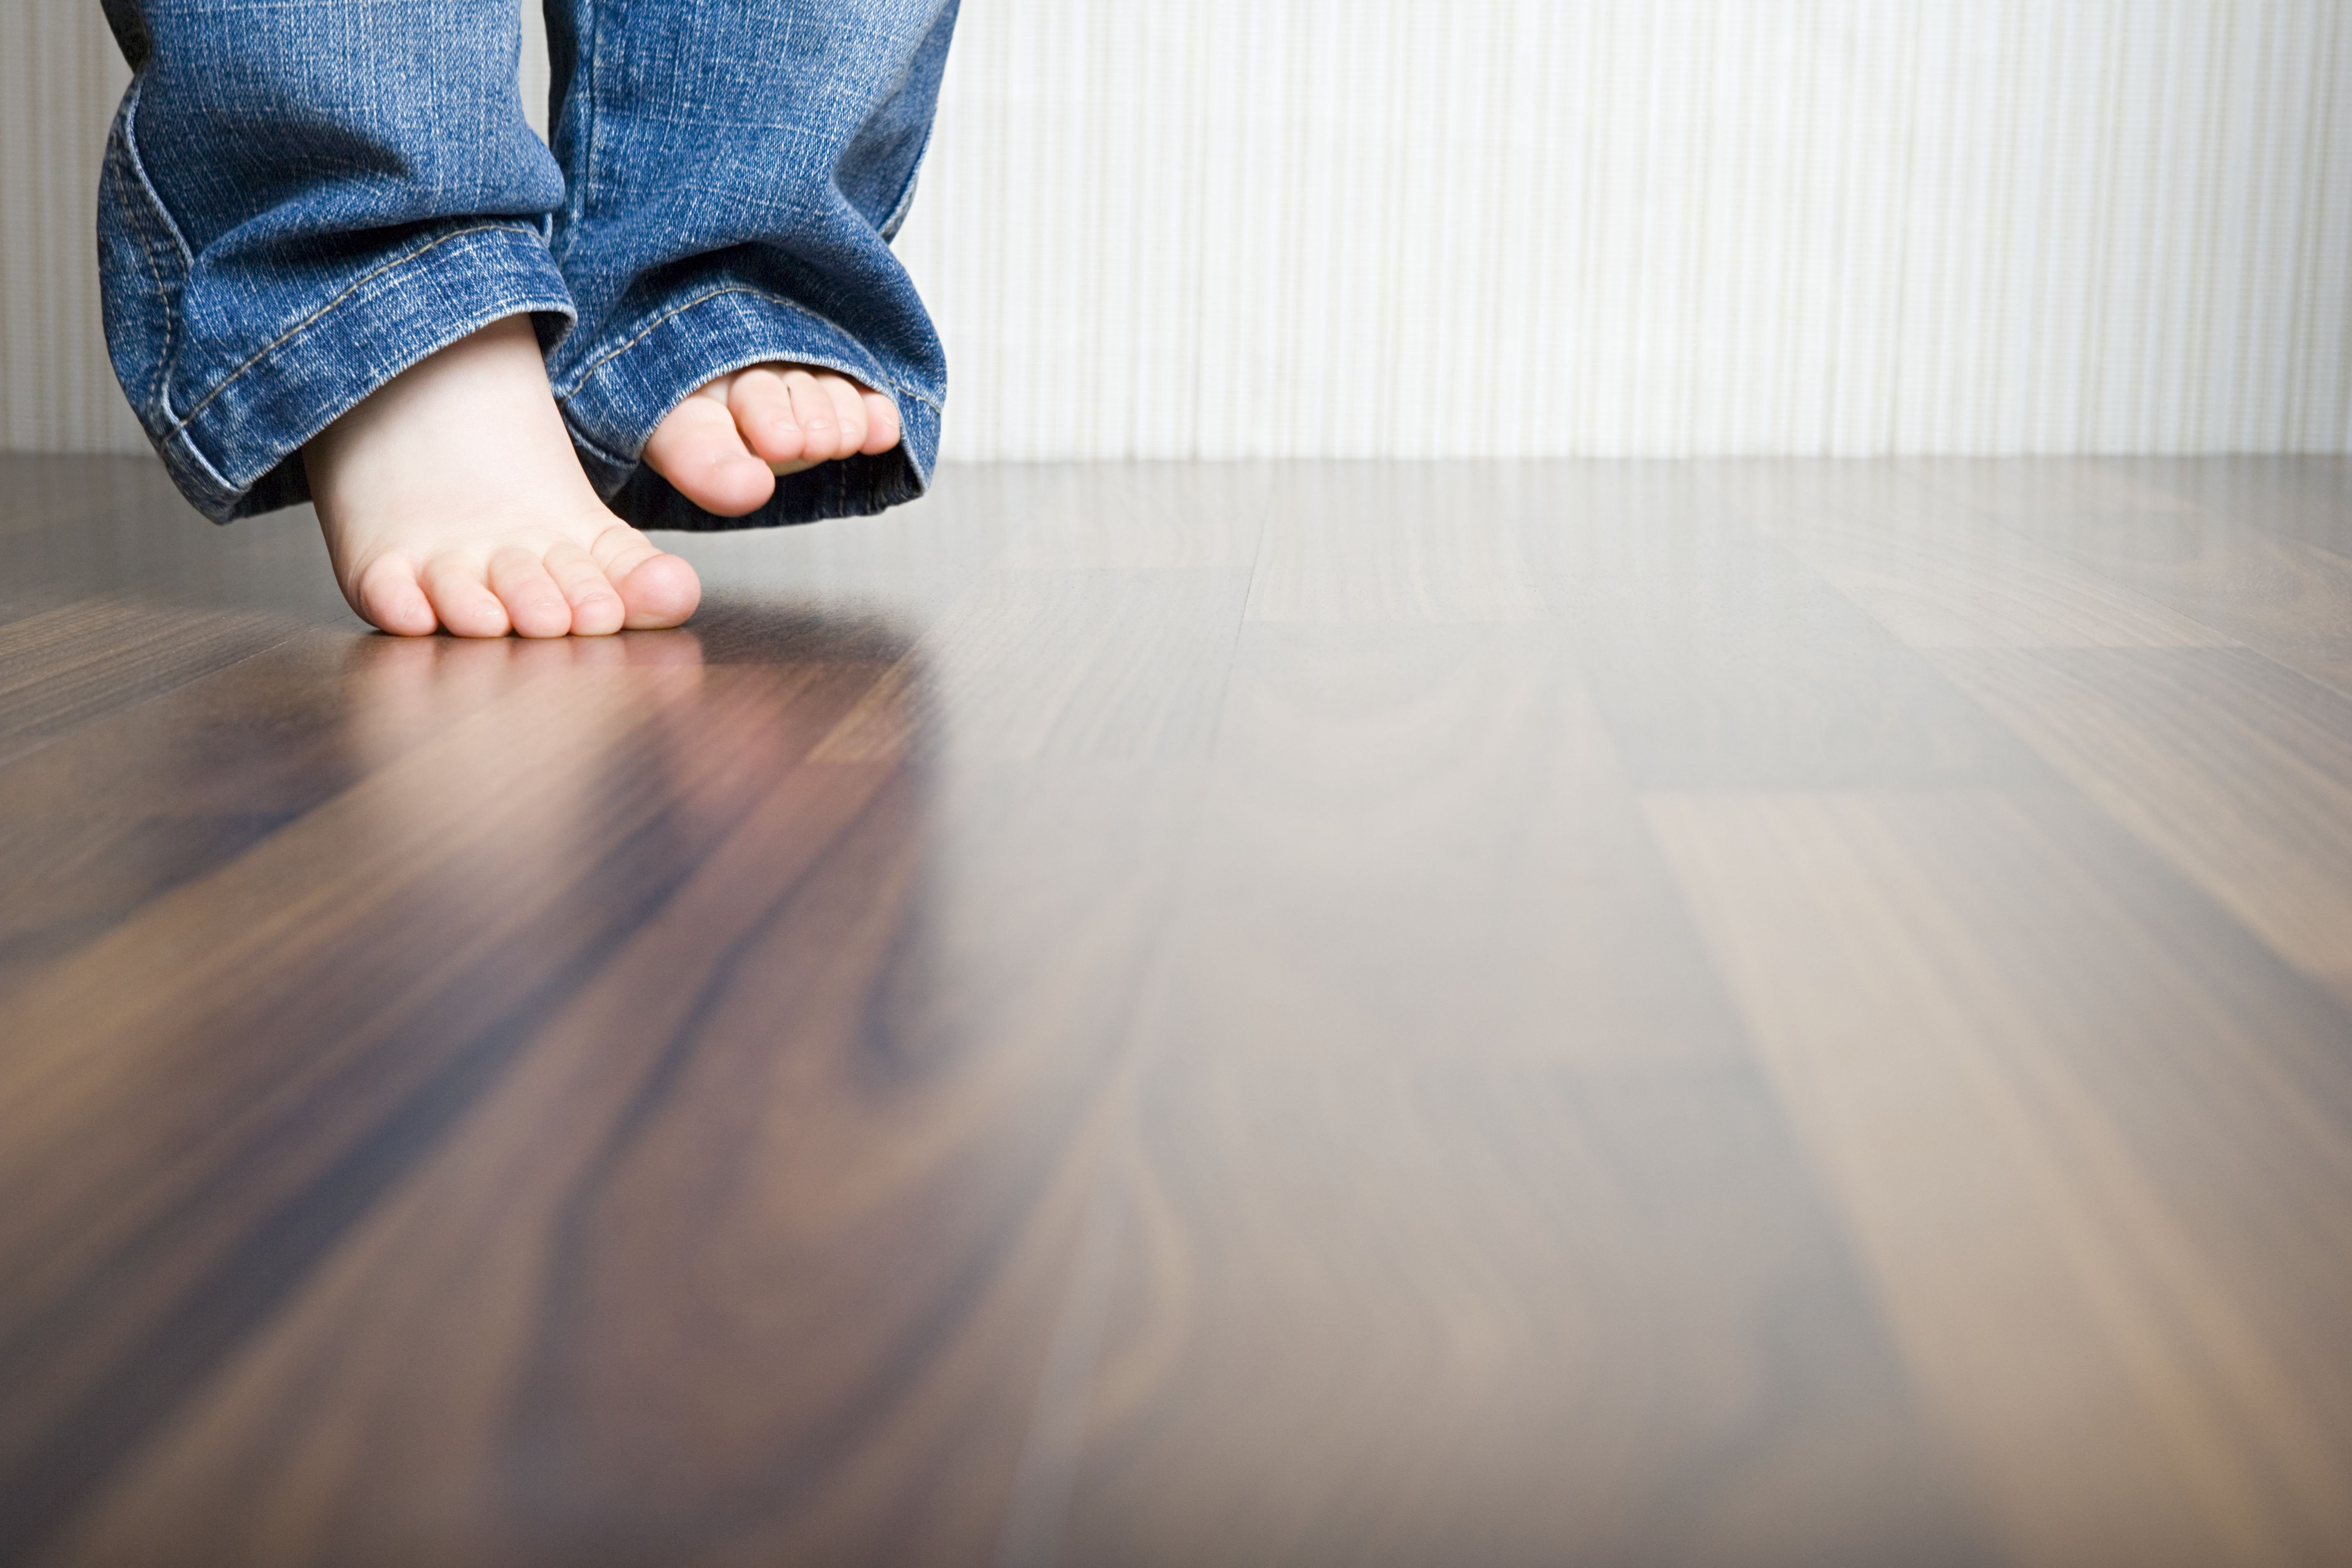 29 Unique Hardwood Floor Colors 2018 2024 free download hardwood floor colors 2018 of how to clean hardwood floors best way to clean wood flooring within 1512149908 gettyimages 75403973